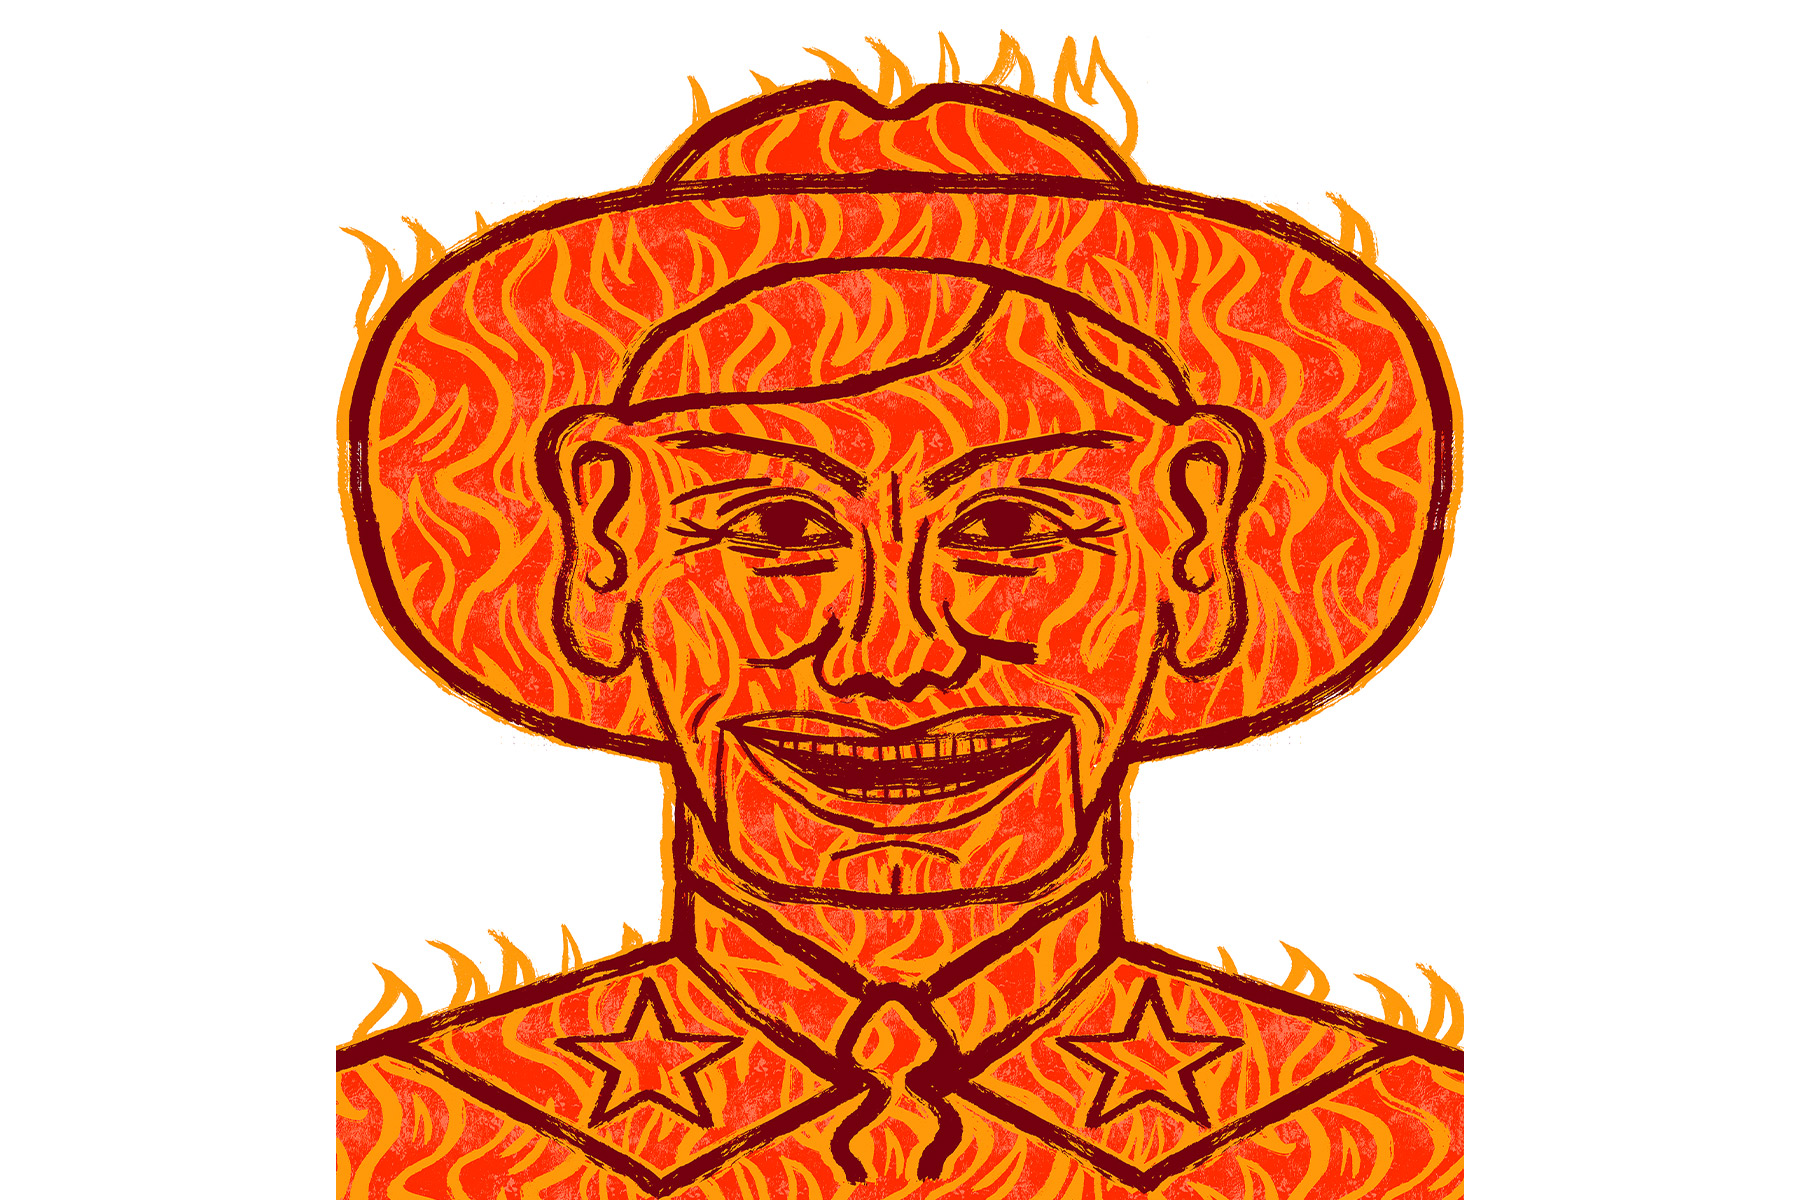 Illustration of Big Tex on fire